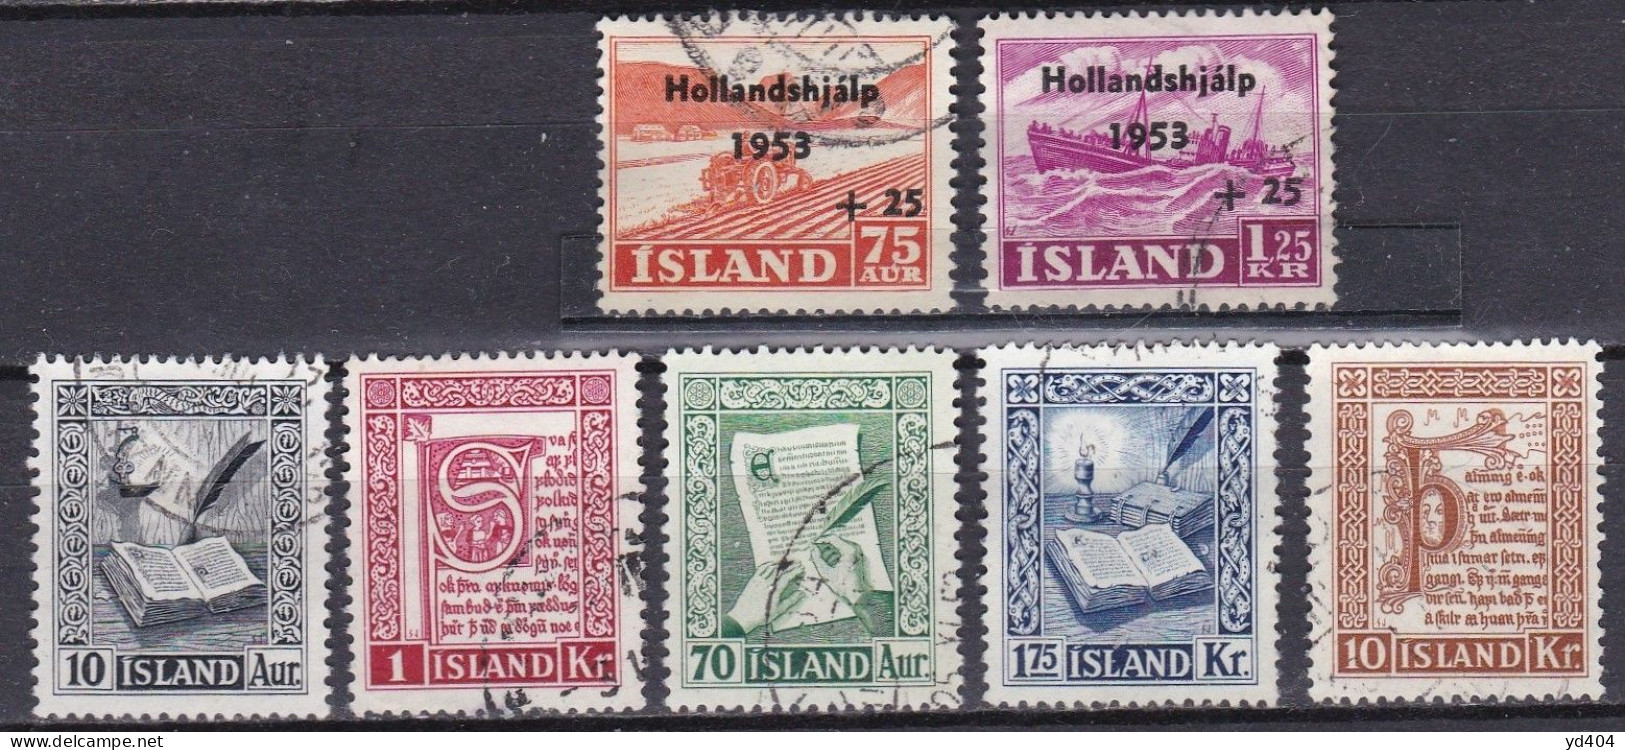 IS058 – ISLANDE – ICELAND – 1953 – FULL YEAR SET – SC # 278/82-B12/3 - USED 13,50 € - Usati